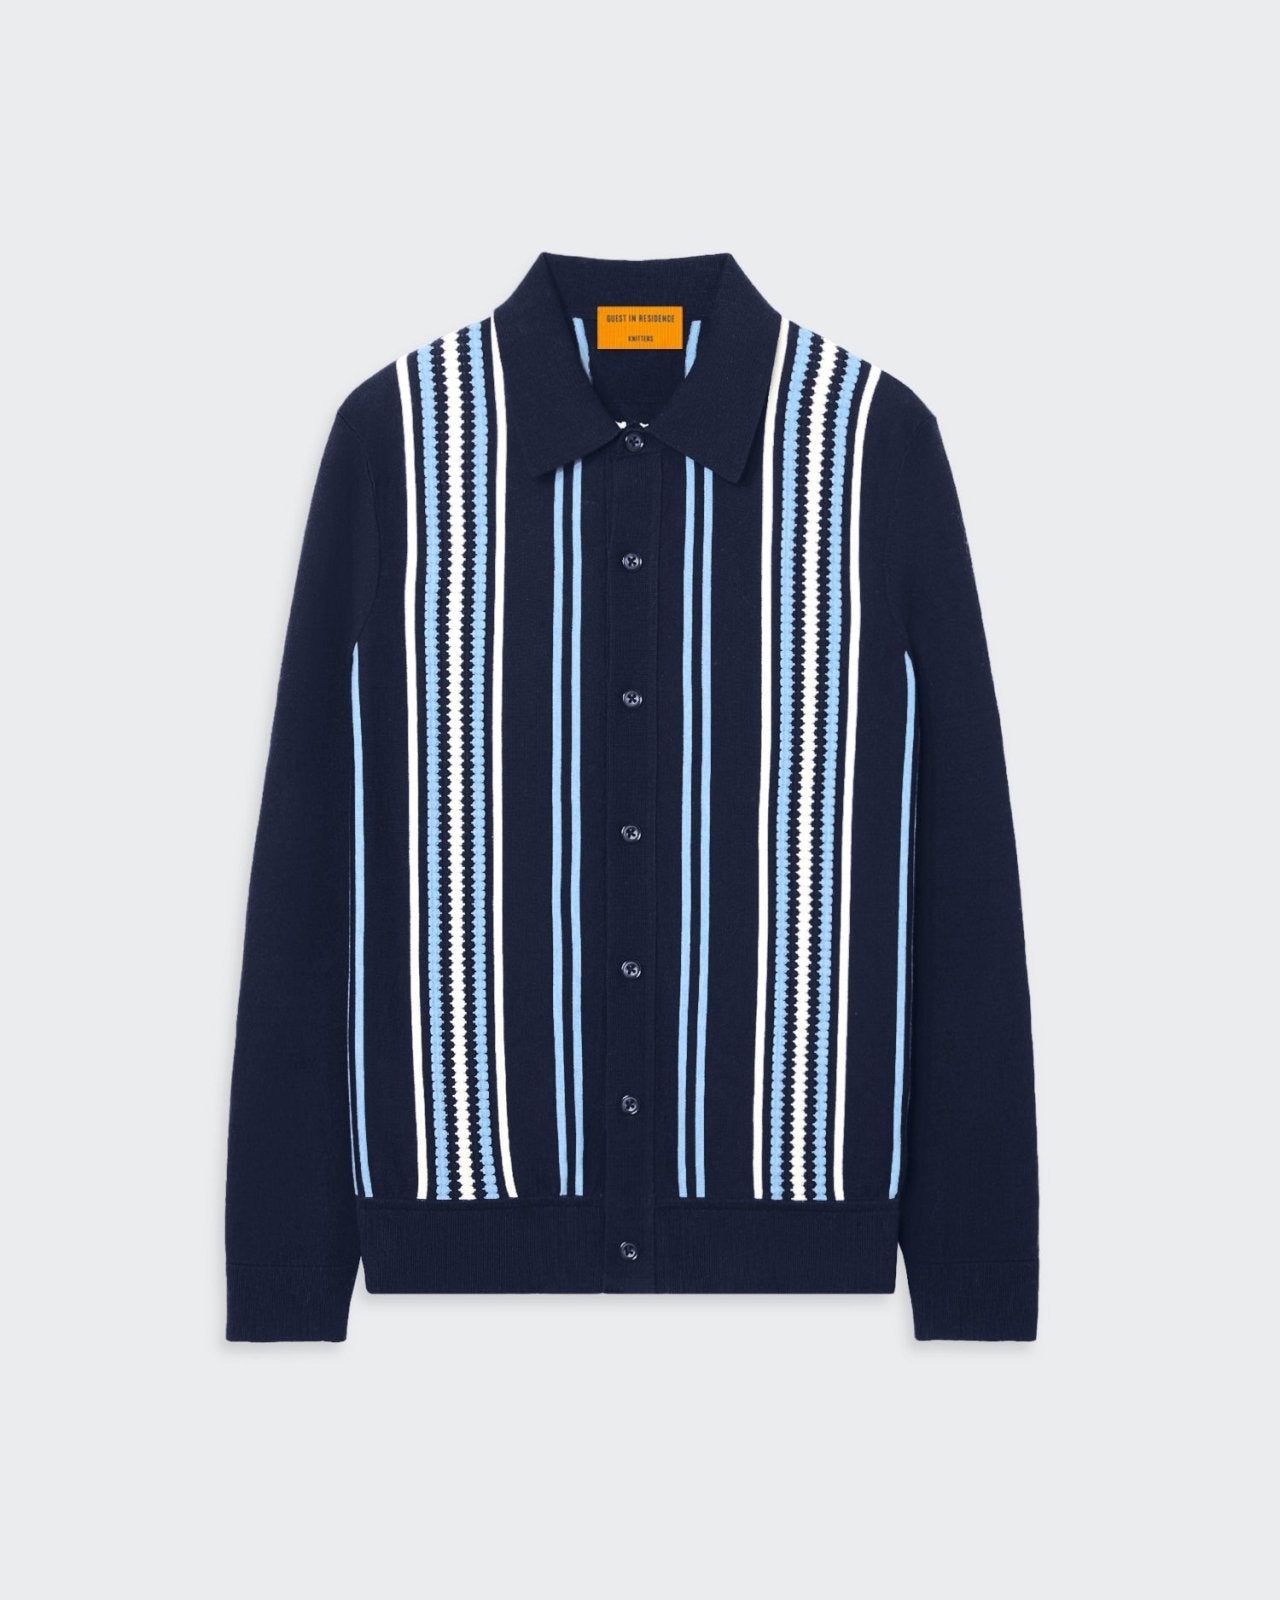 Stripe Plaza Shirt - Midnight/Denim Blue/Cream